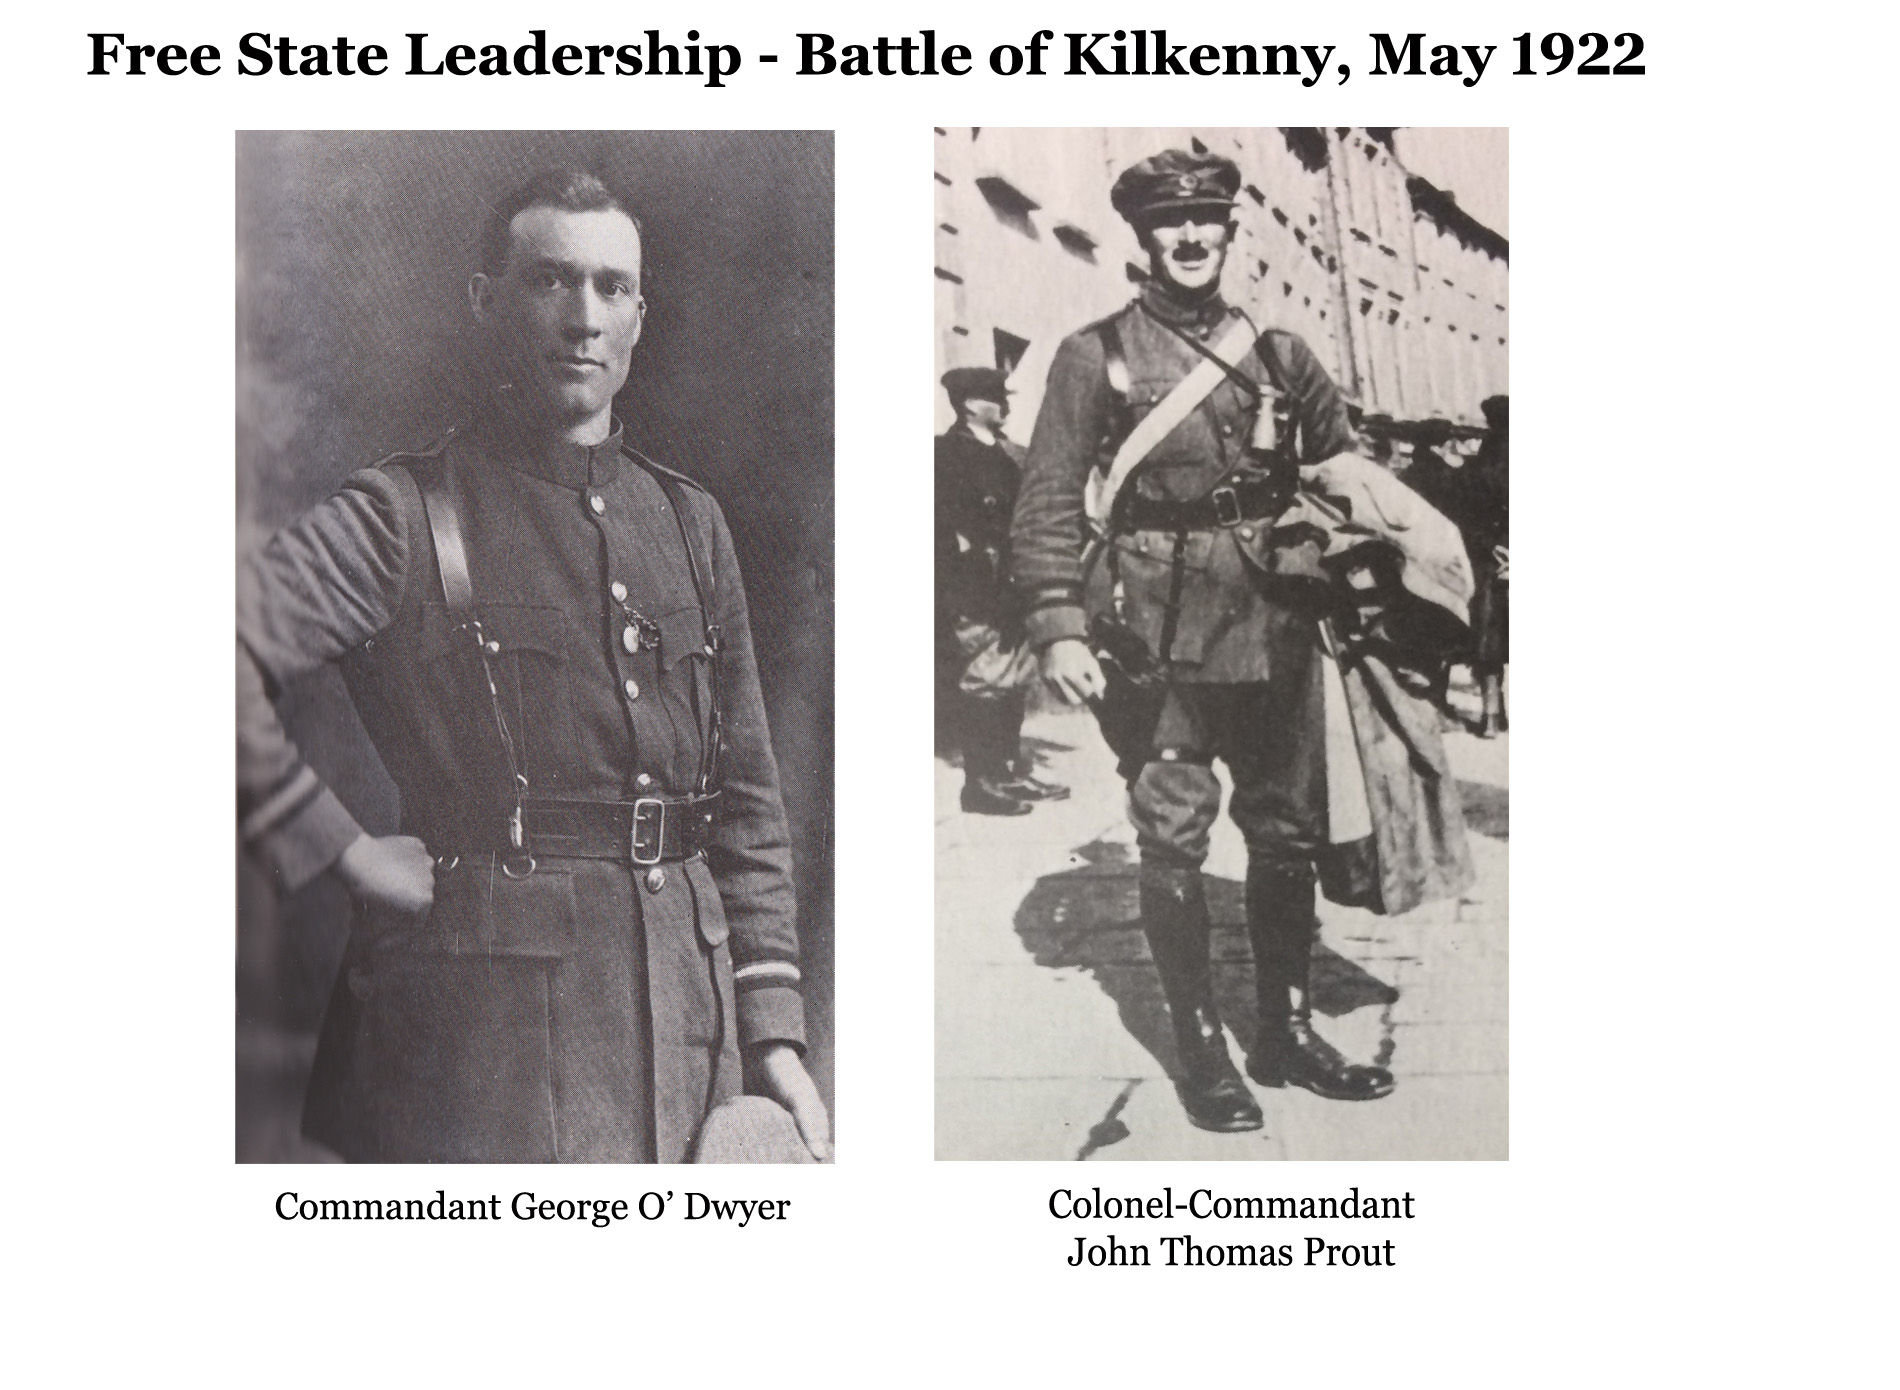 Battle-of-Kilkenny-Free-State-leaders